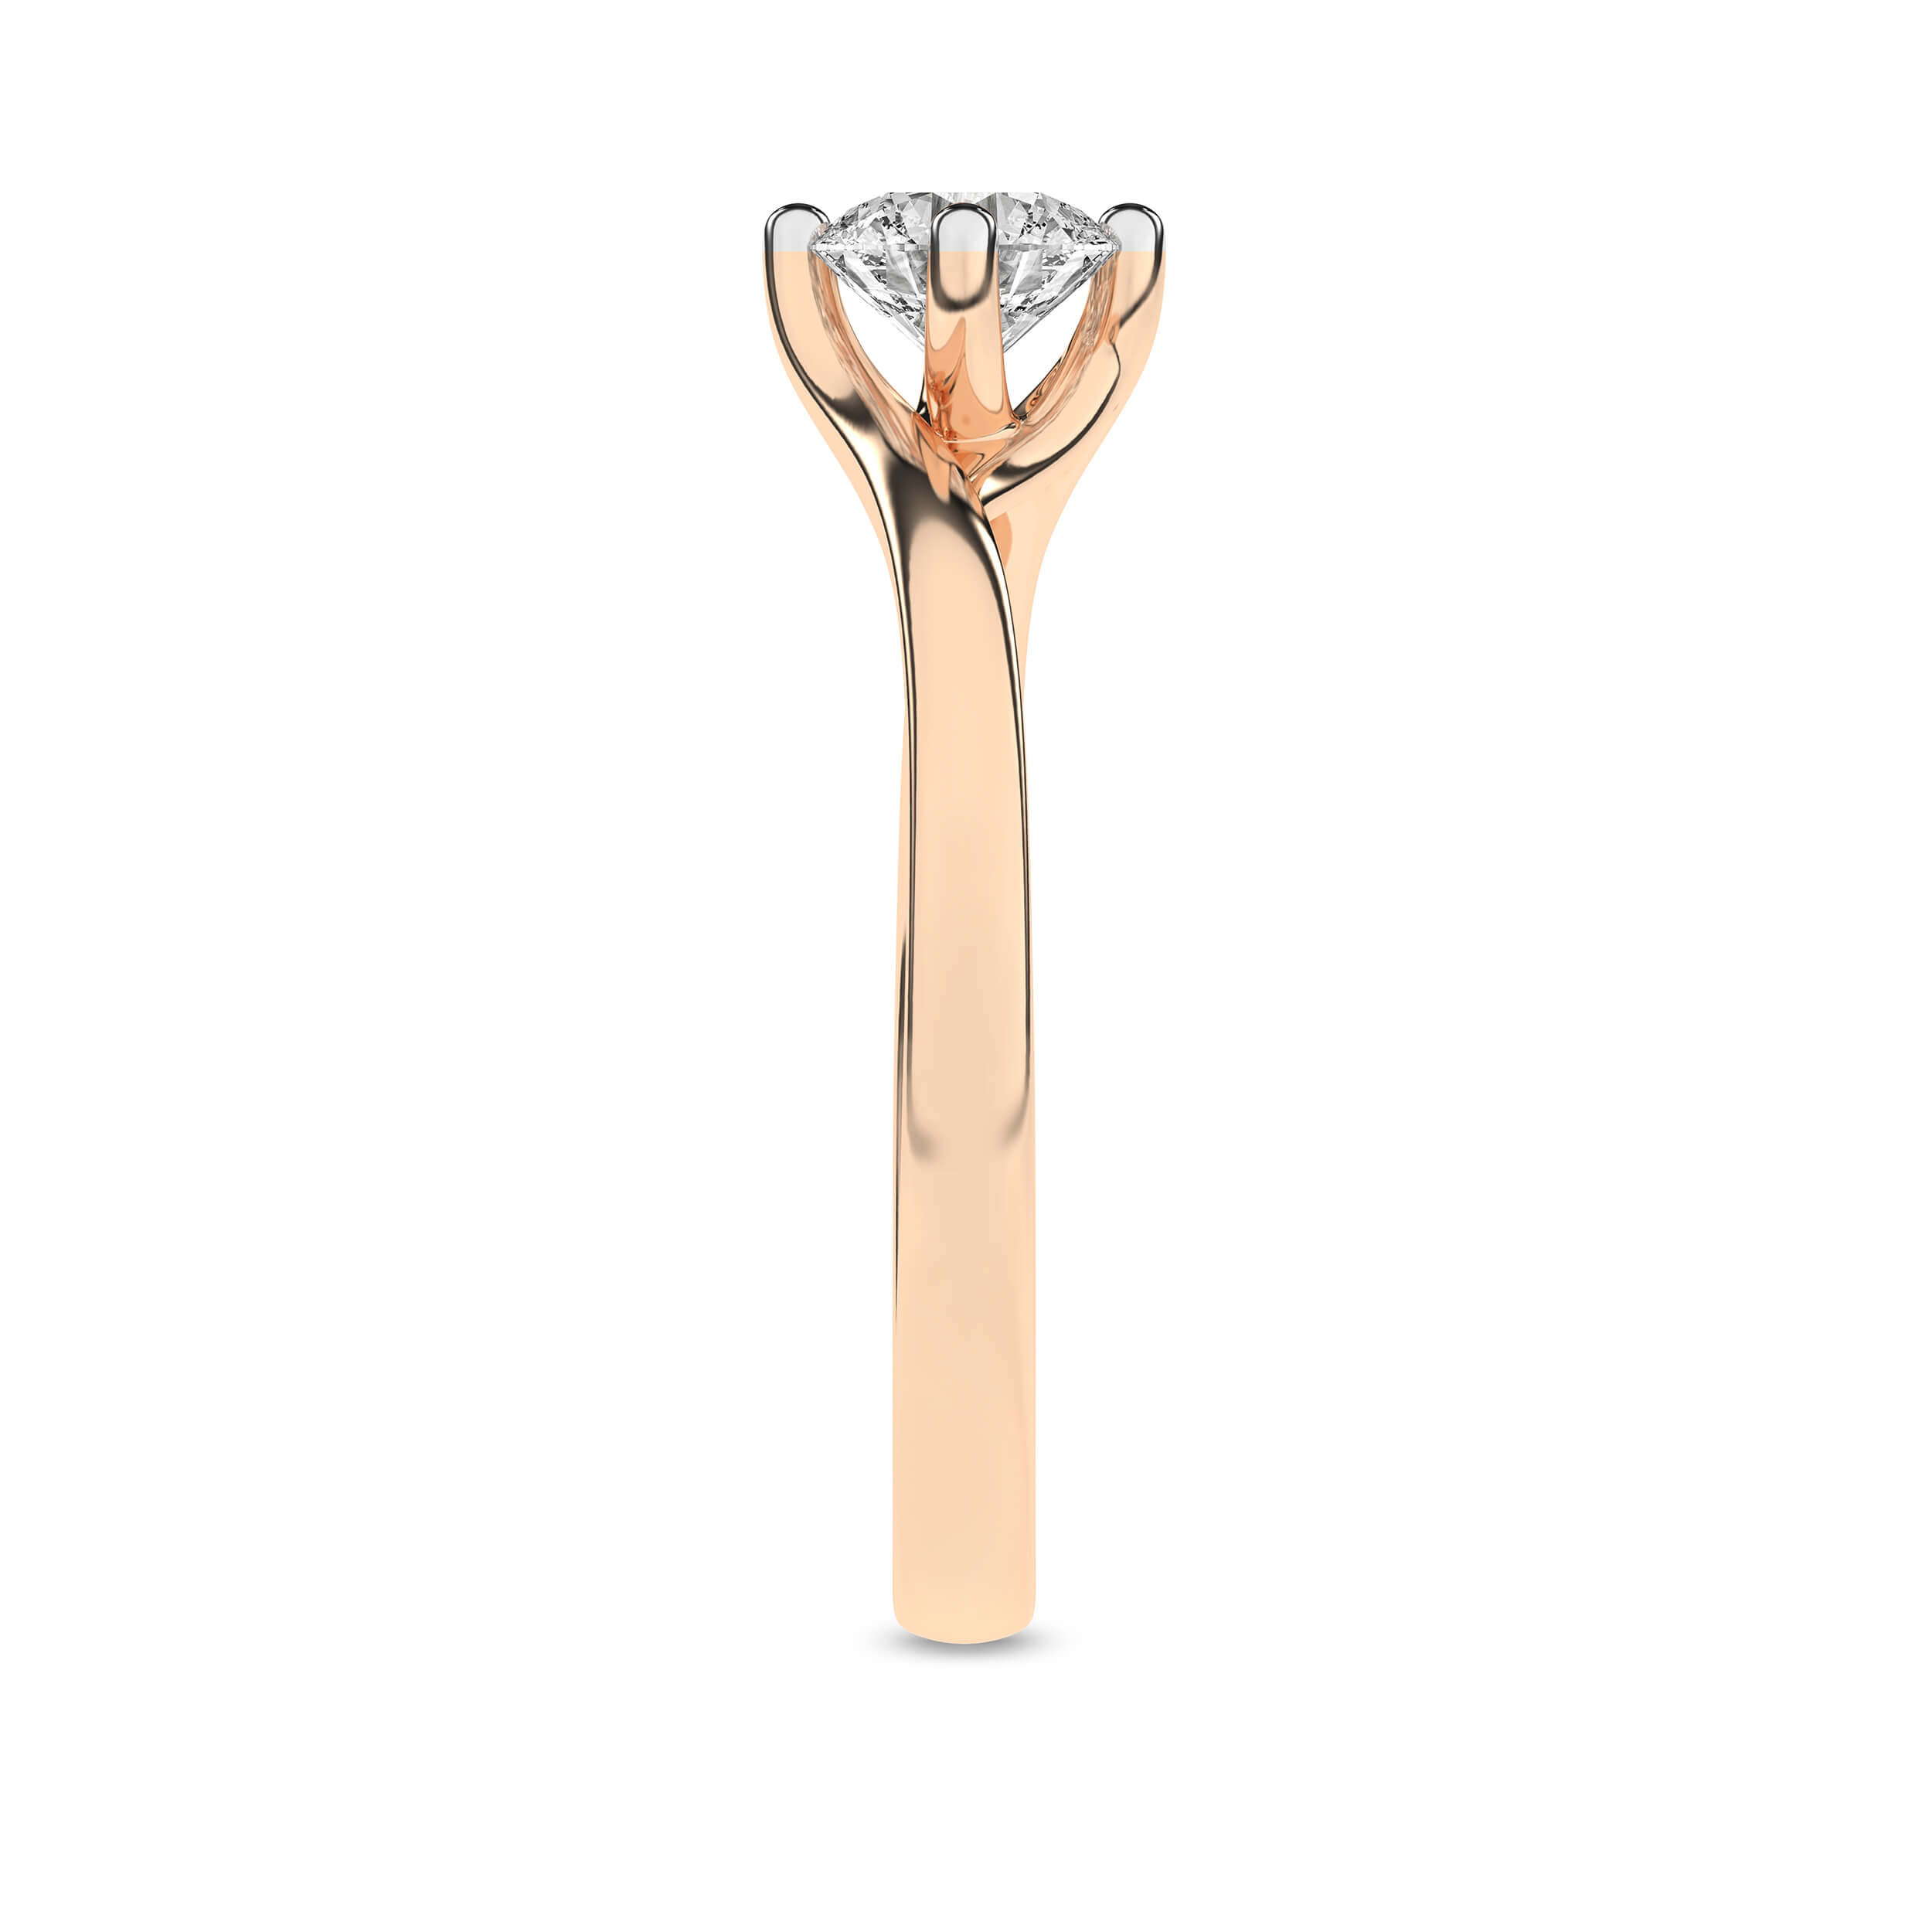 Inel de logodna din Aur Alb 14K cu Diamant 0.33Ct, articol RS1320, previzualizare foto 3